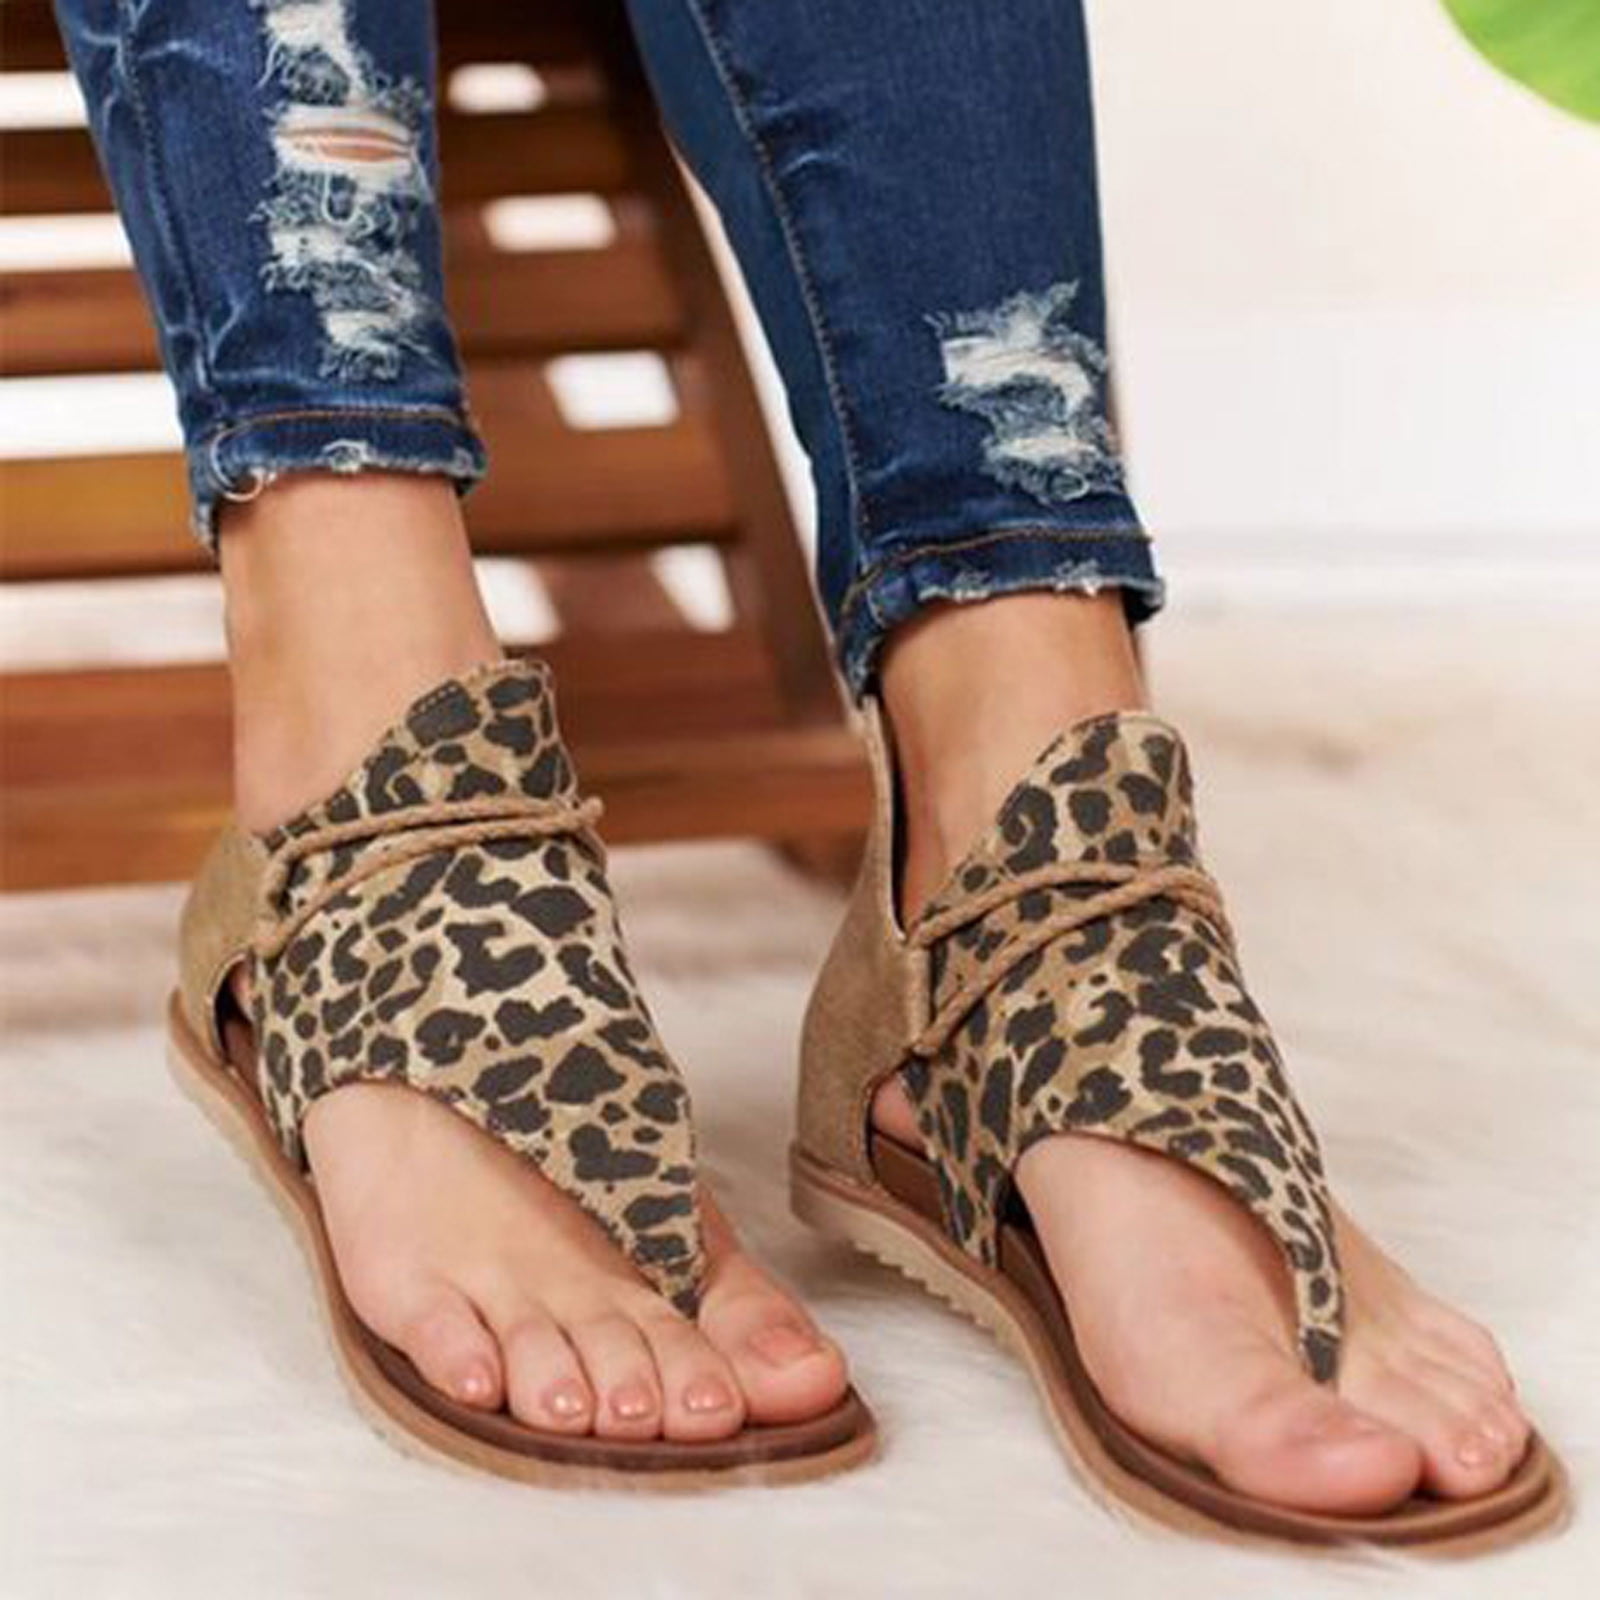 CHGBMOK Sandals for Women Summer Clip-Toe Shoes Zipper Comfy Sandals Flats  Casual Beach Sandals 